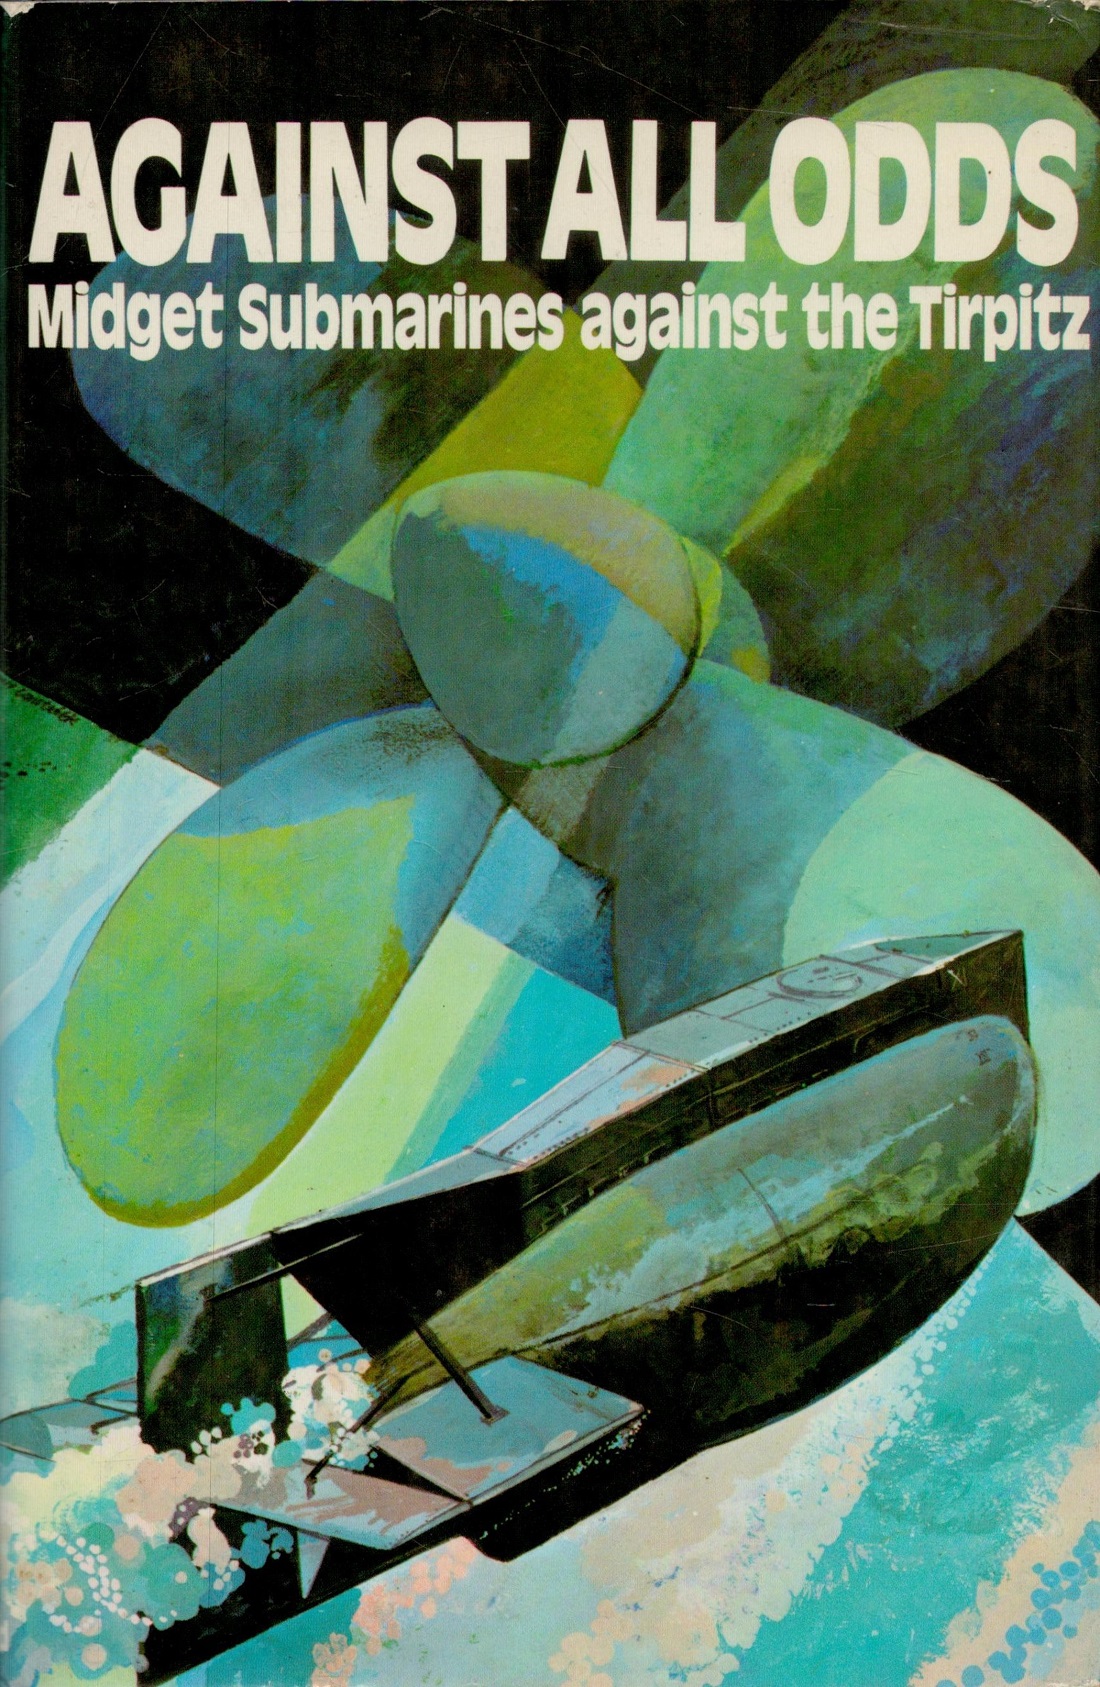 Thomas Gallagher Hardback Book titled Against All Odds Midget Submarines V Tirpitz Published in